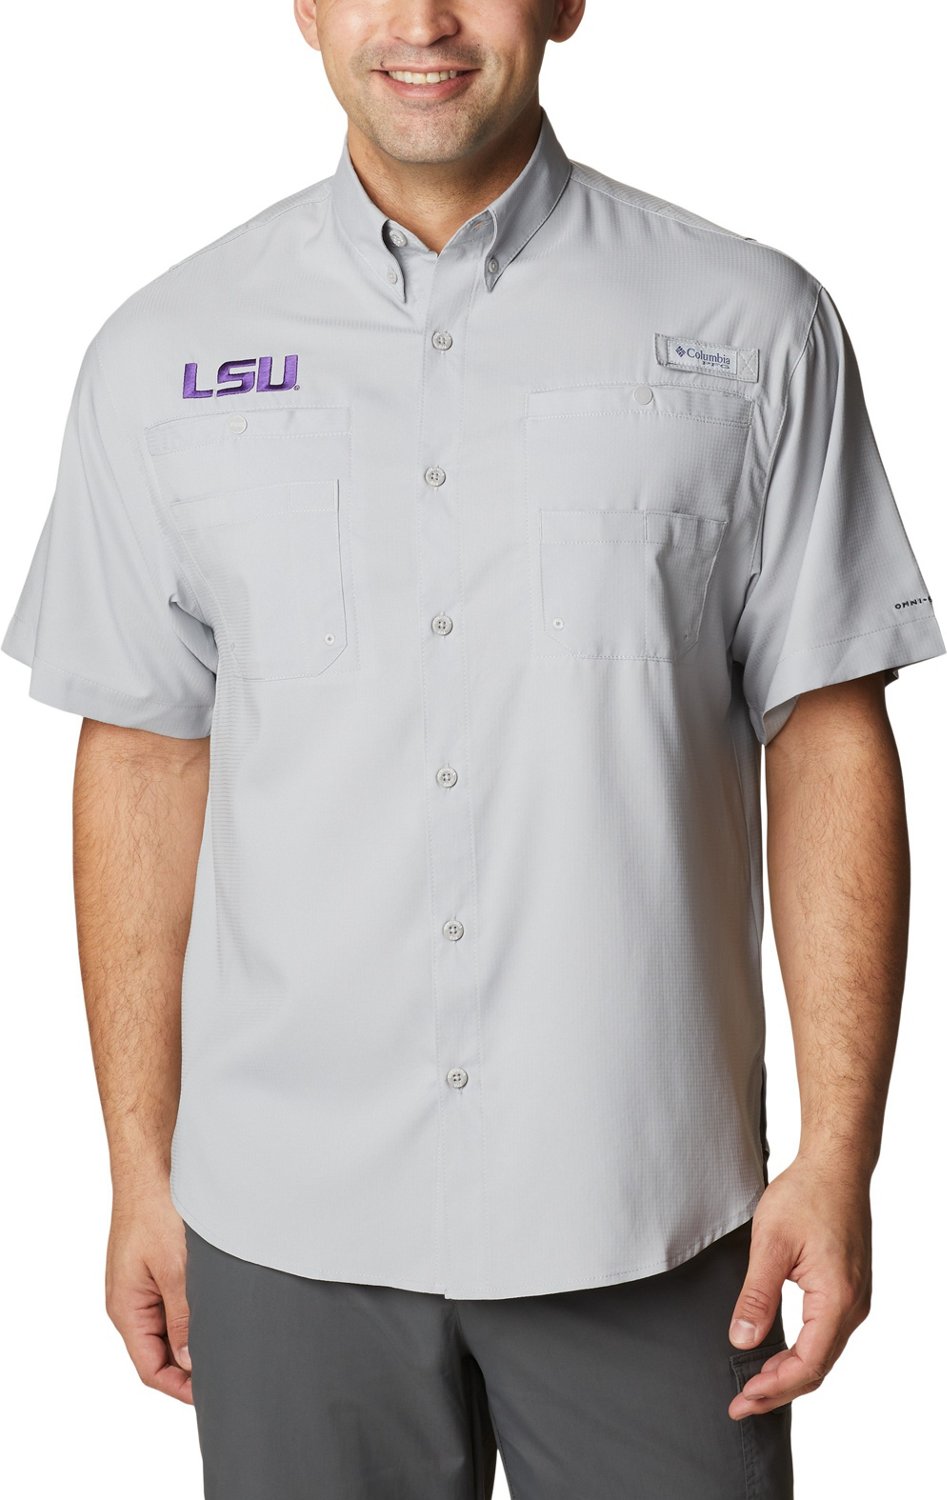 Columbia Sportswear Men's Big and Tall Louisiana State University Tamiami  Button-Up Shirt